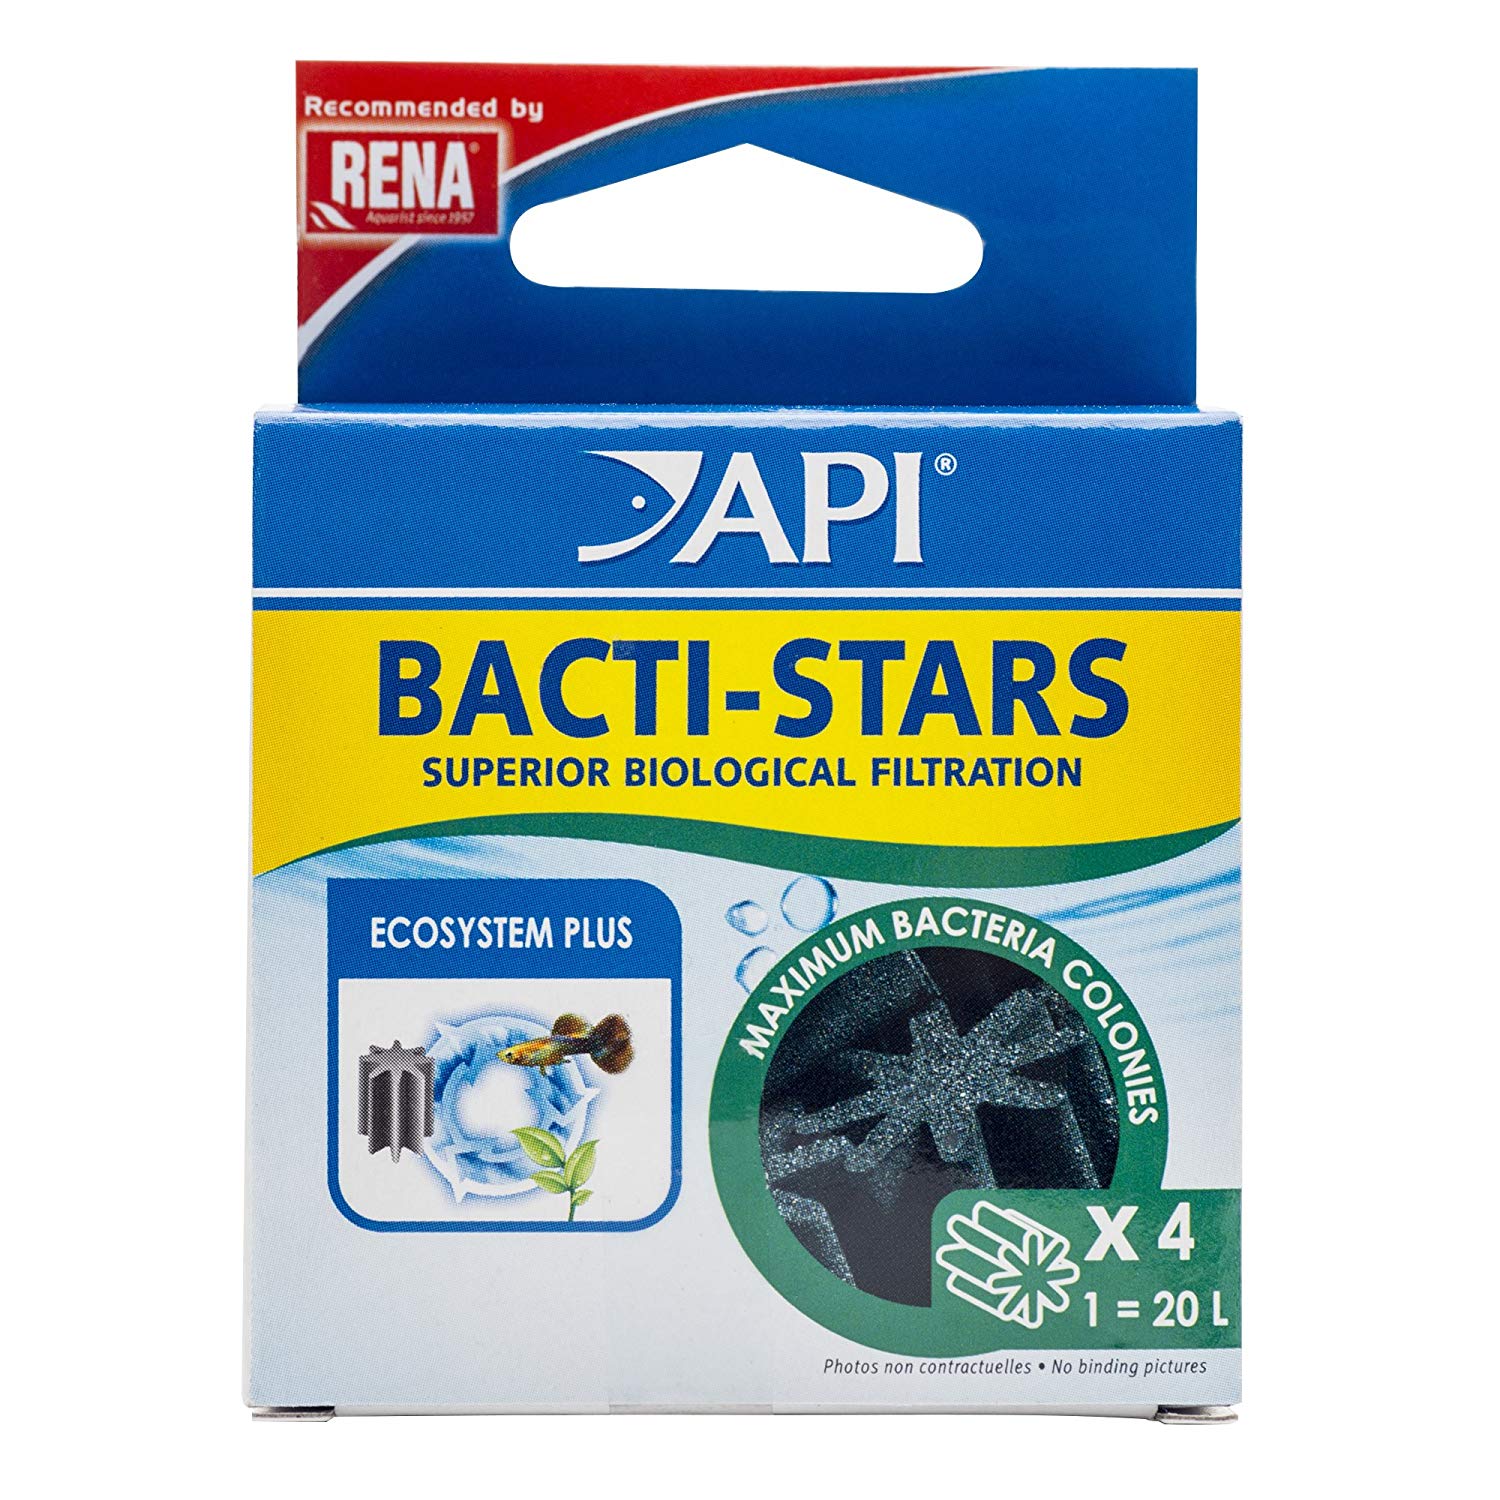 BACTI-STARS